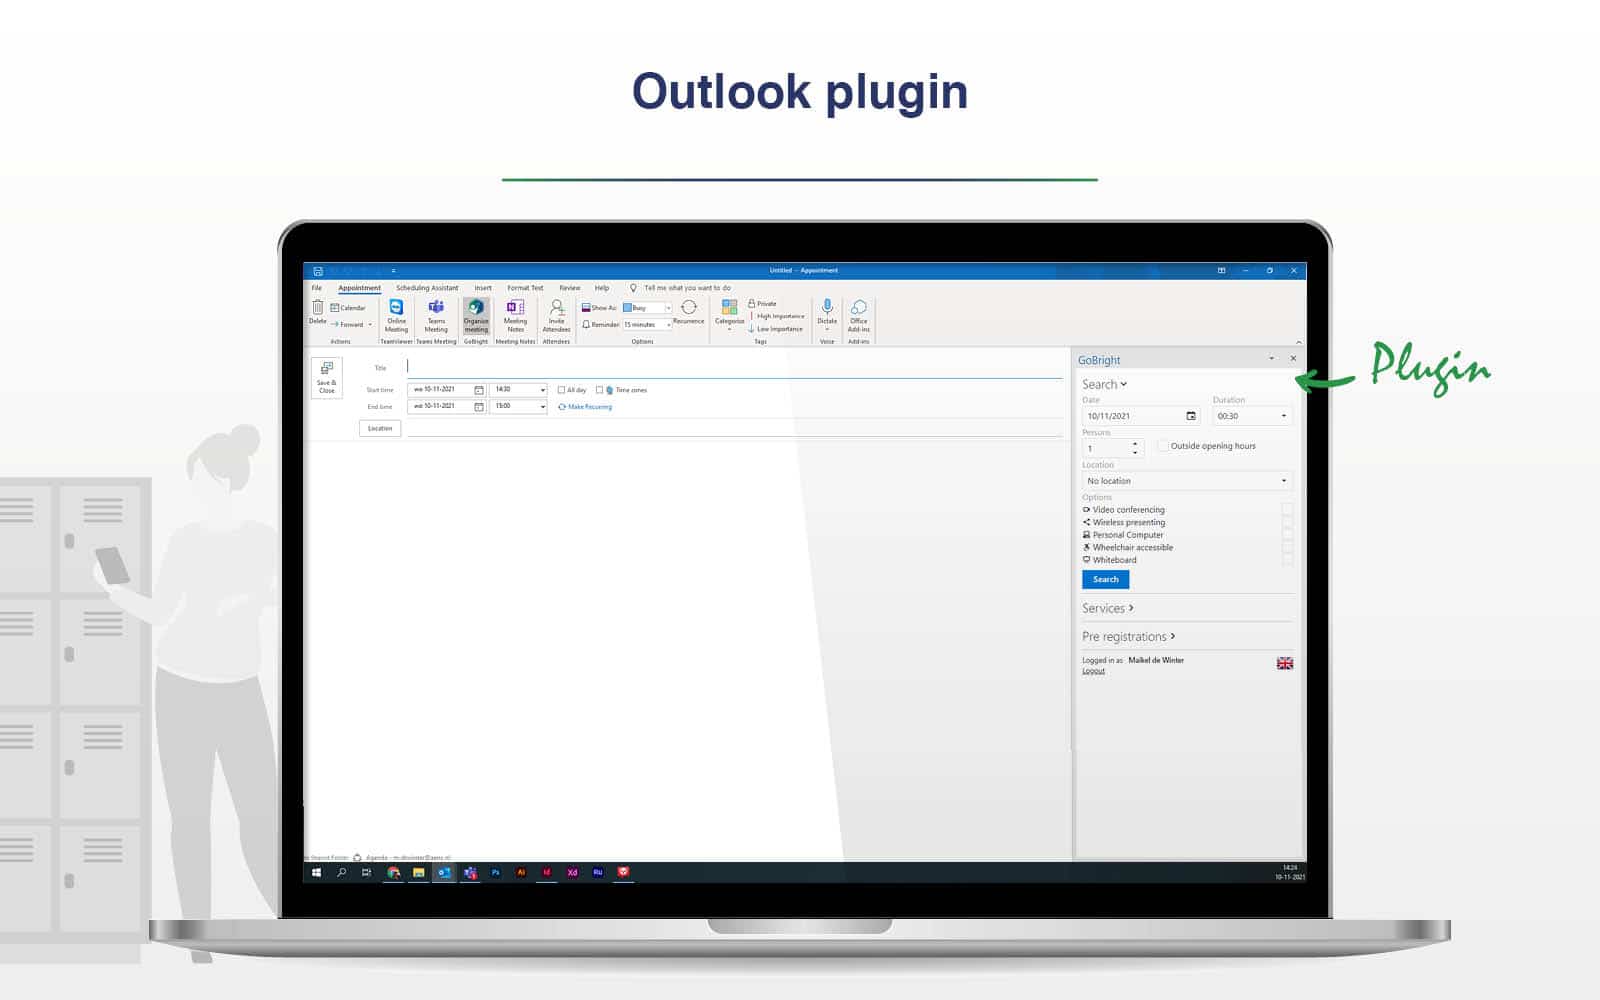 Outlook Plugin